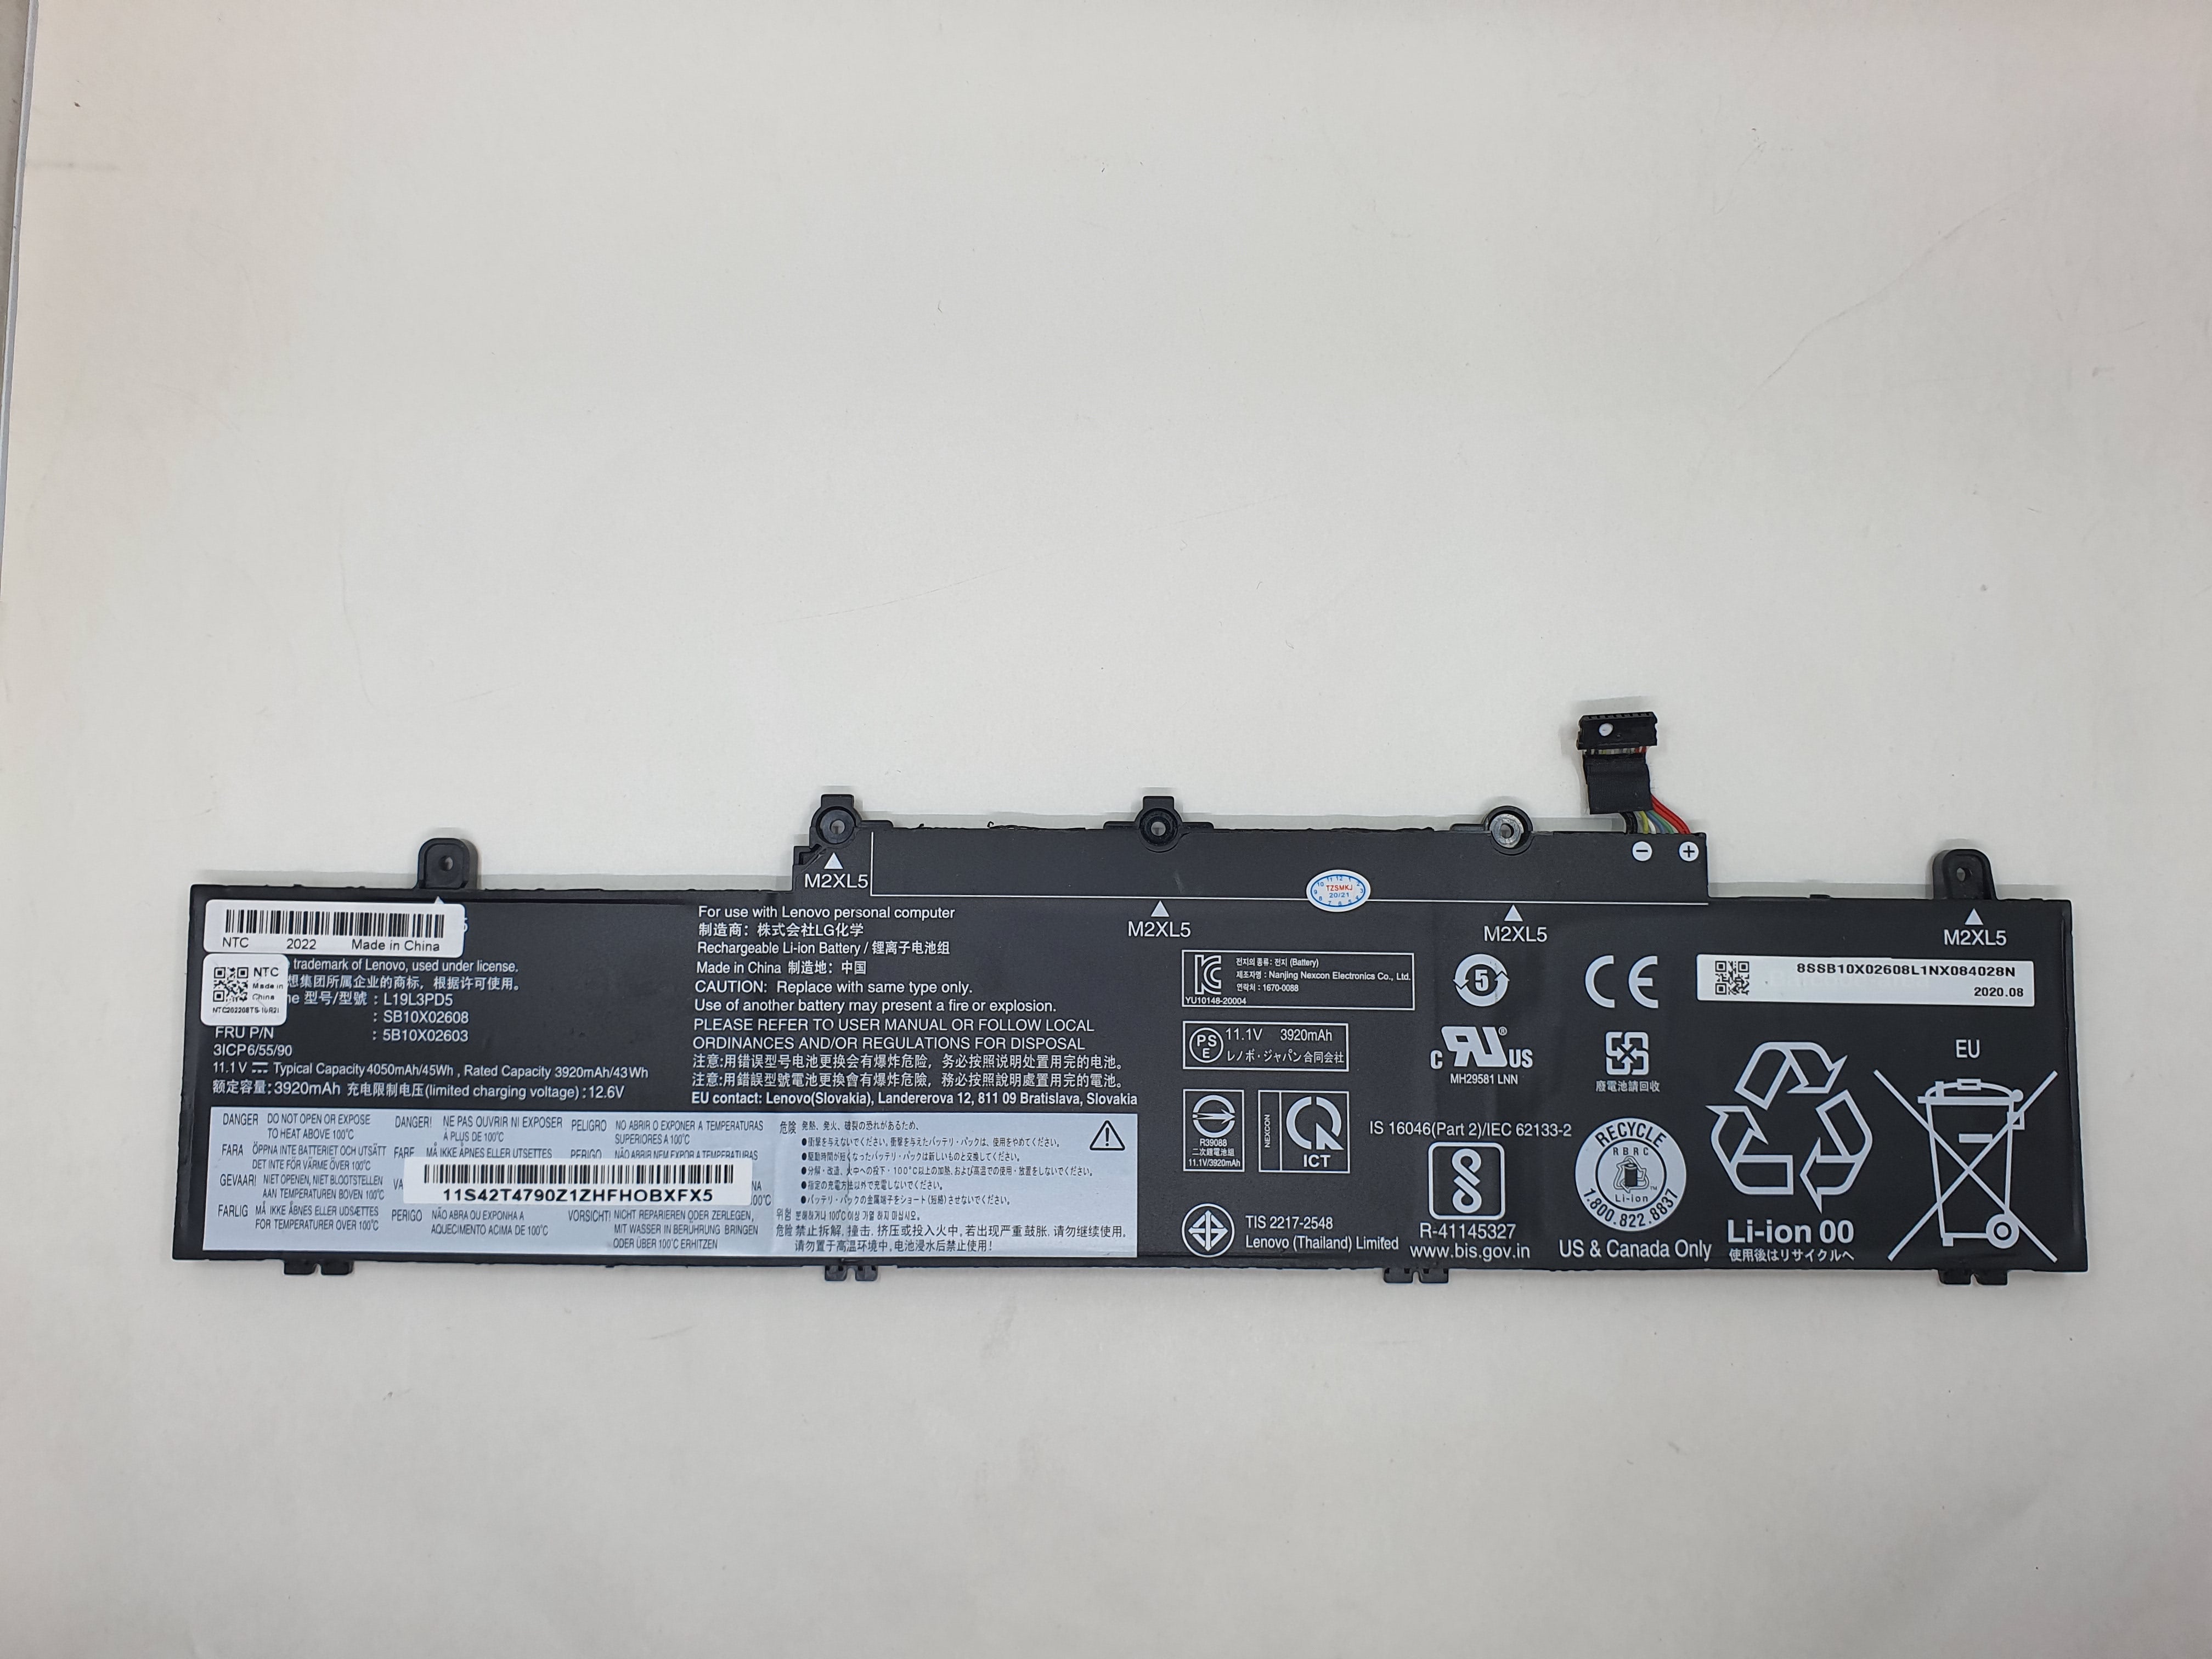 Lenovo Battery E15 Gen 2 WL for replacement - ThinkPad E15 Gen 2